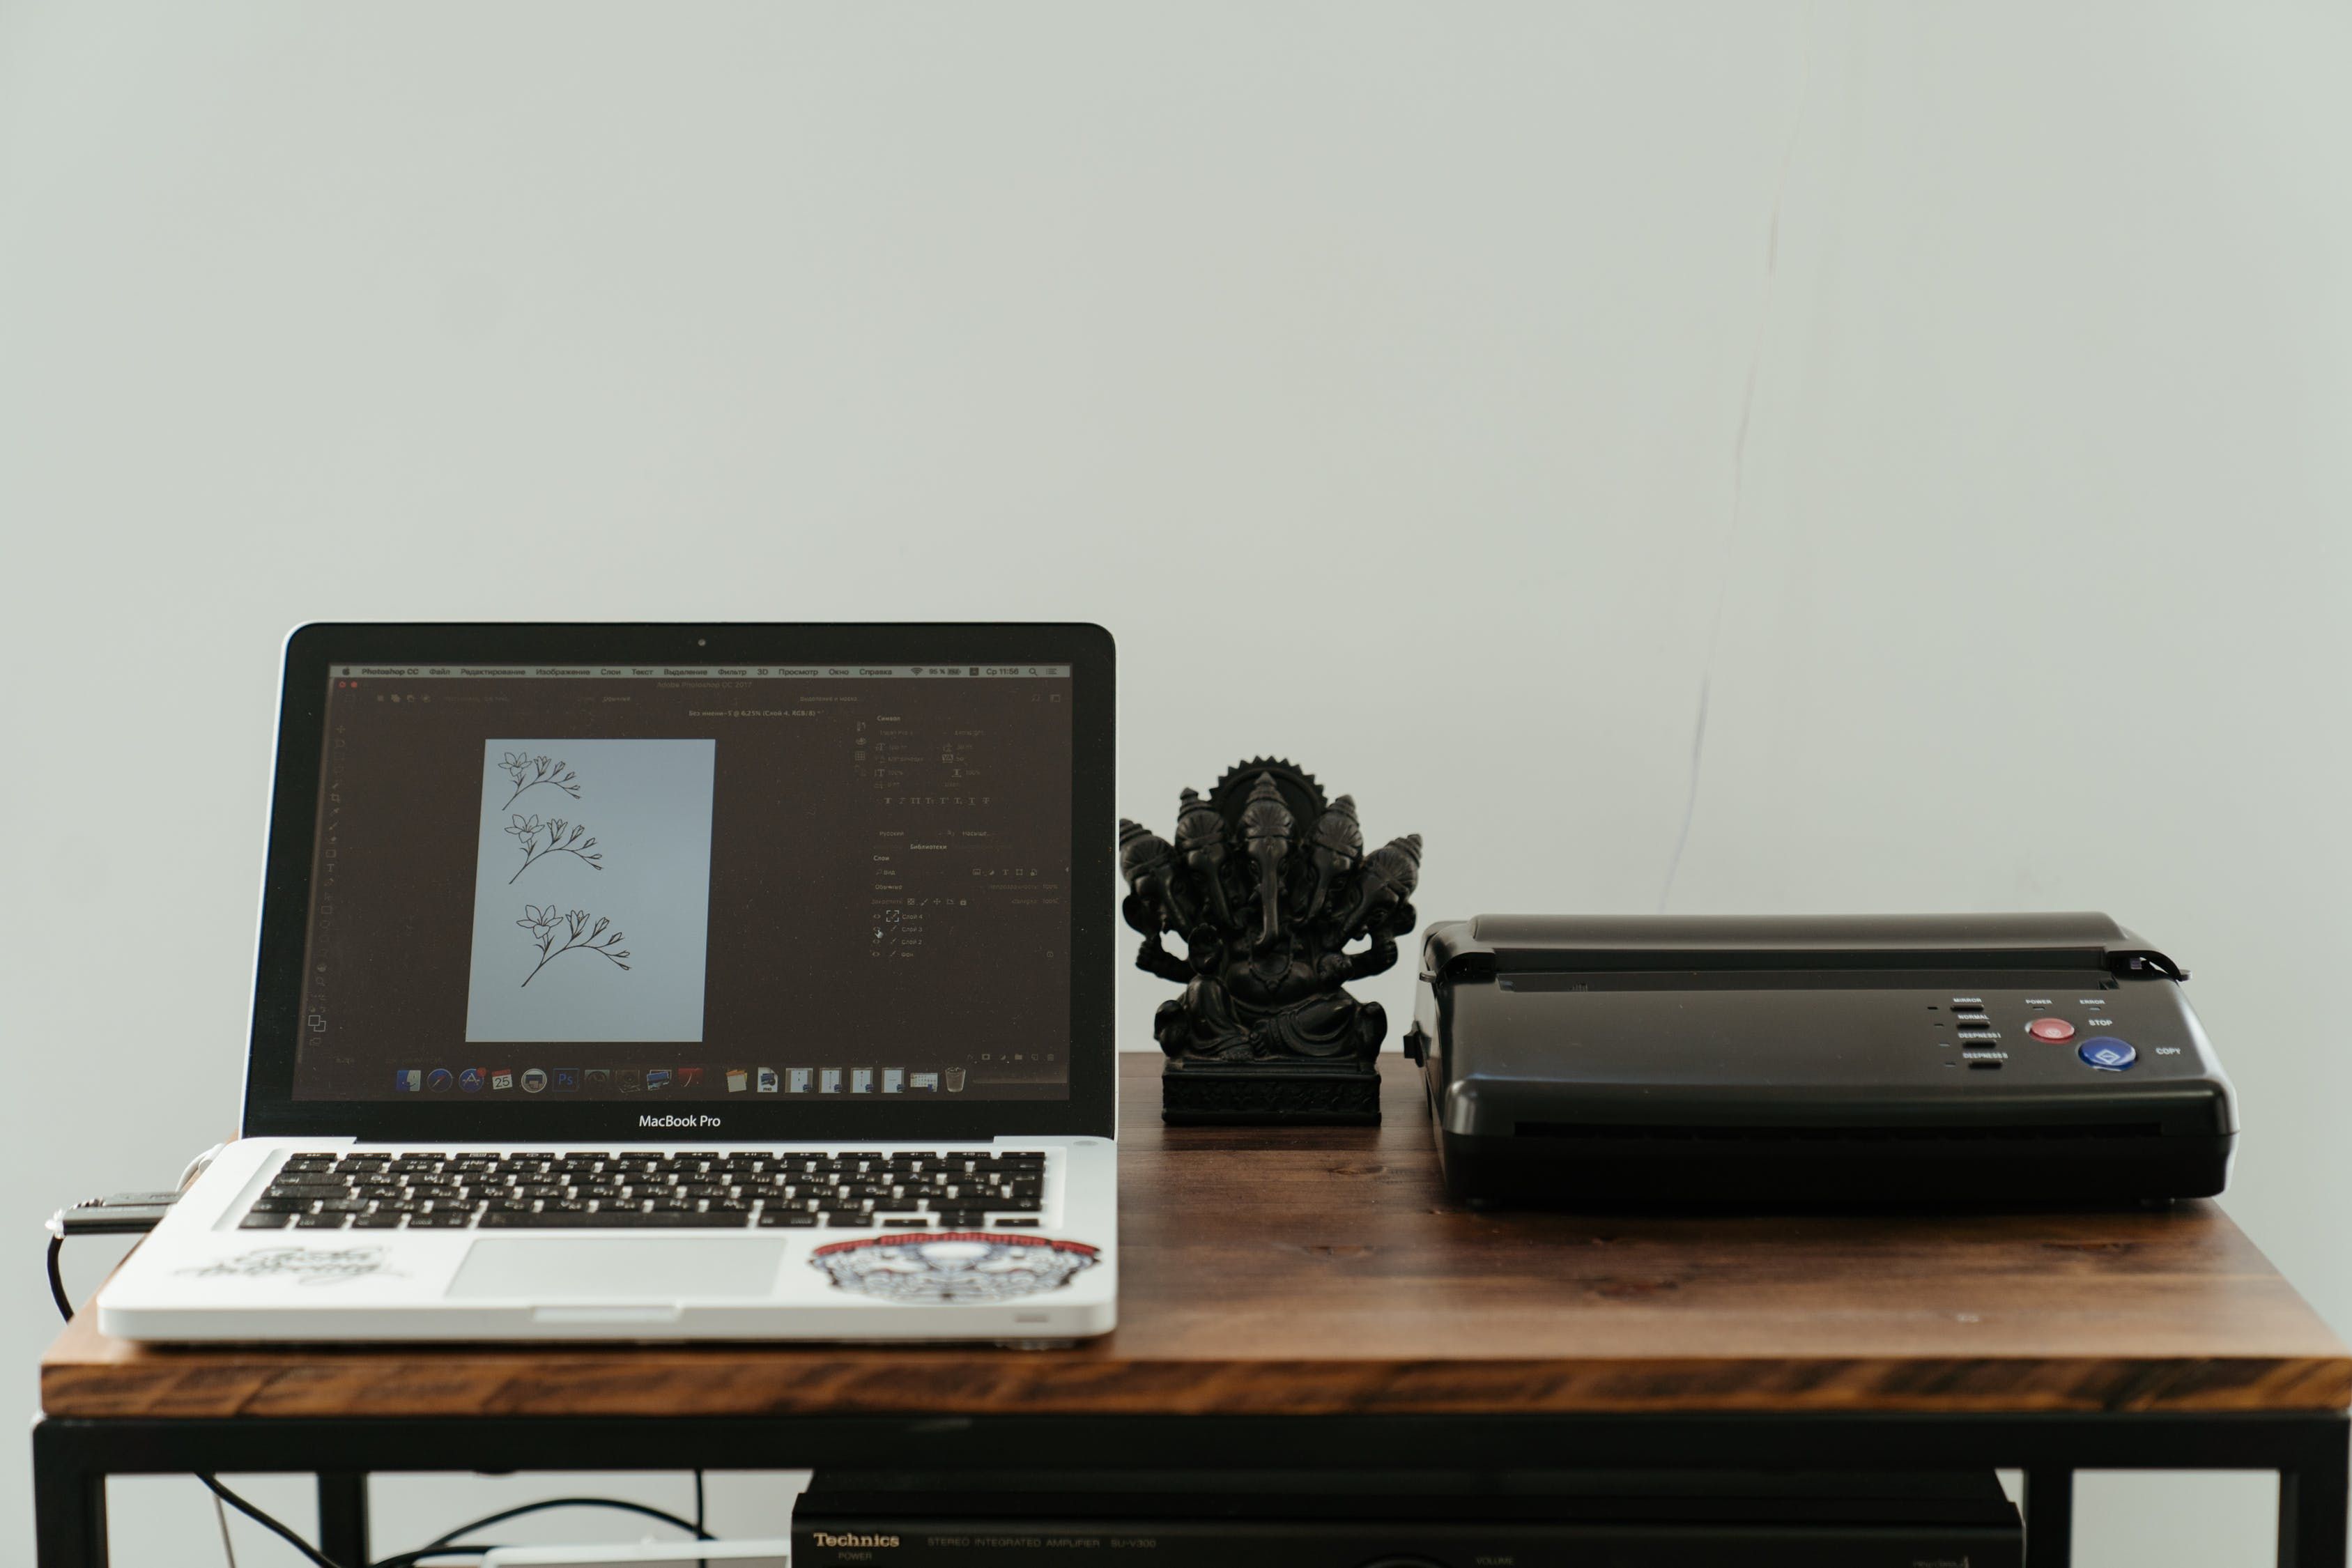 Laptop and Printer on Desk